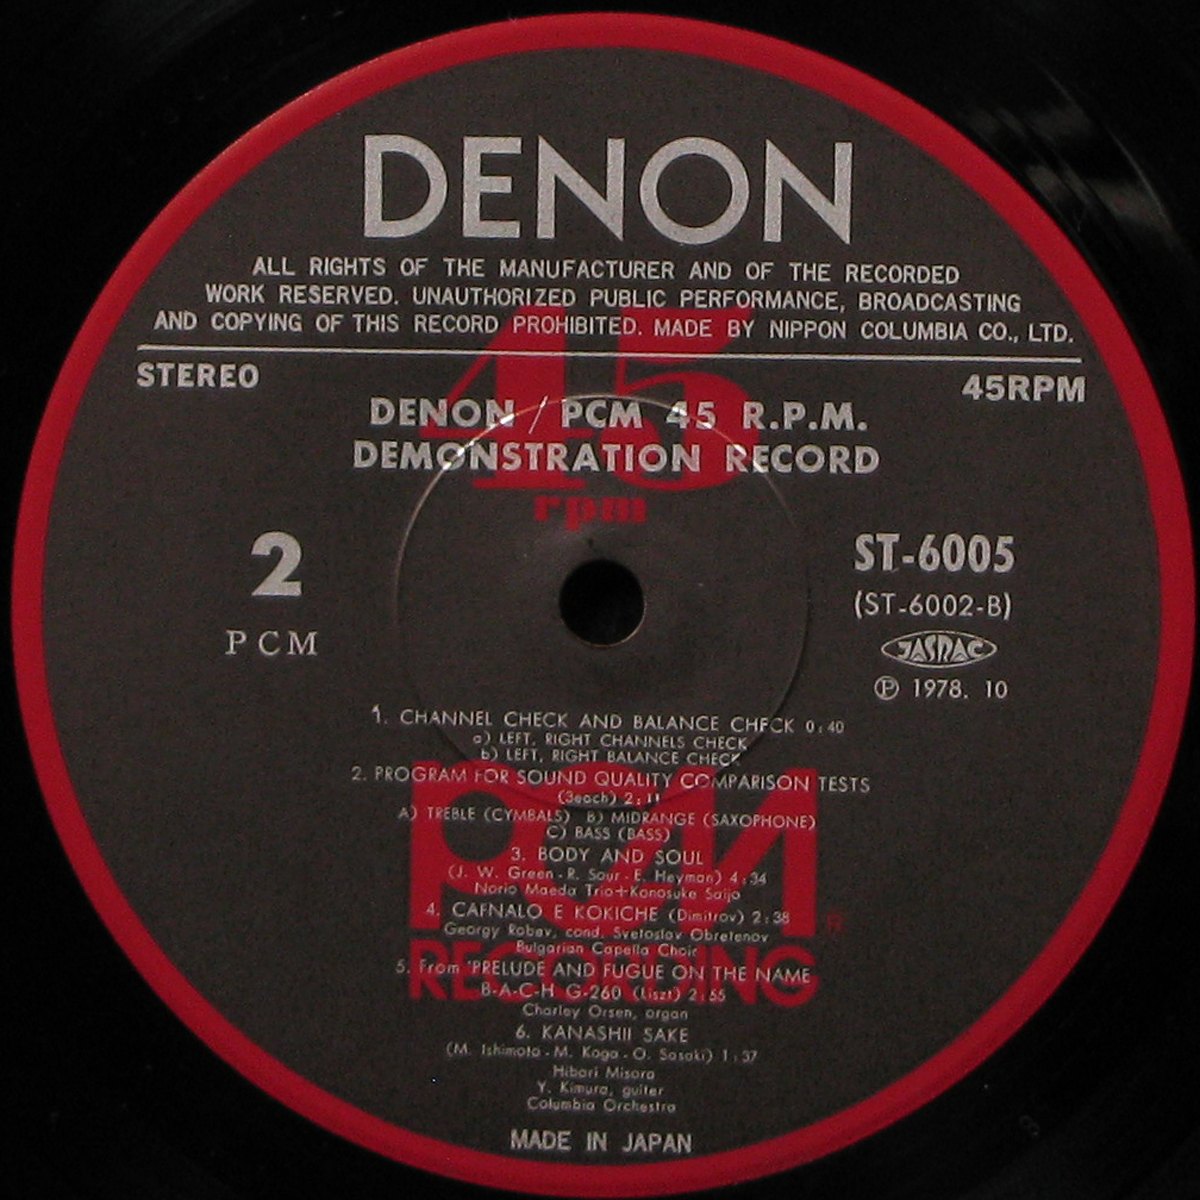 Тестовая Пластинка Demonstration Record - Denon / PCM Recording - 45 R.P.M.  фото 3